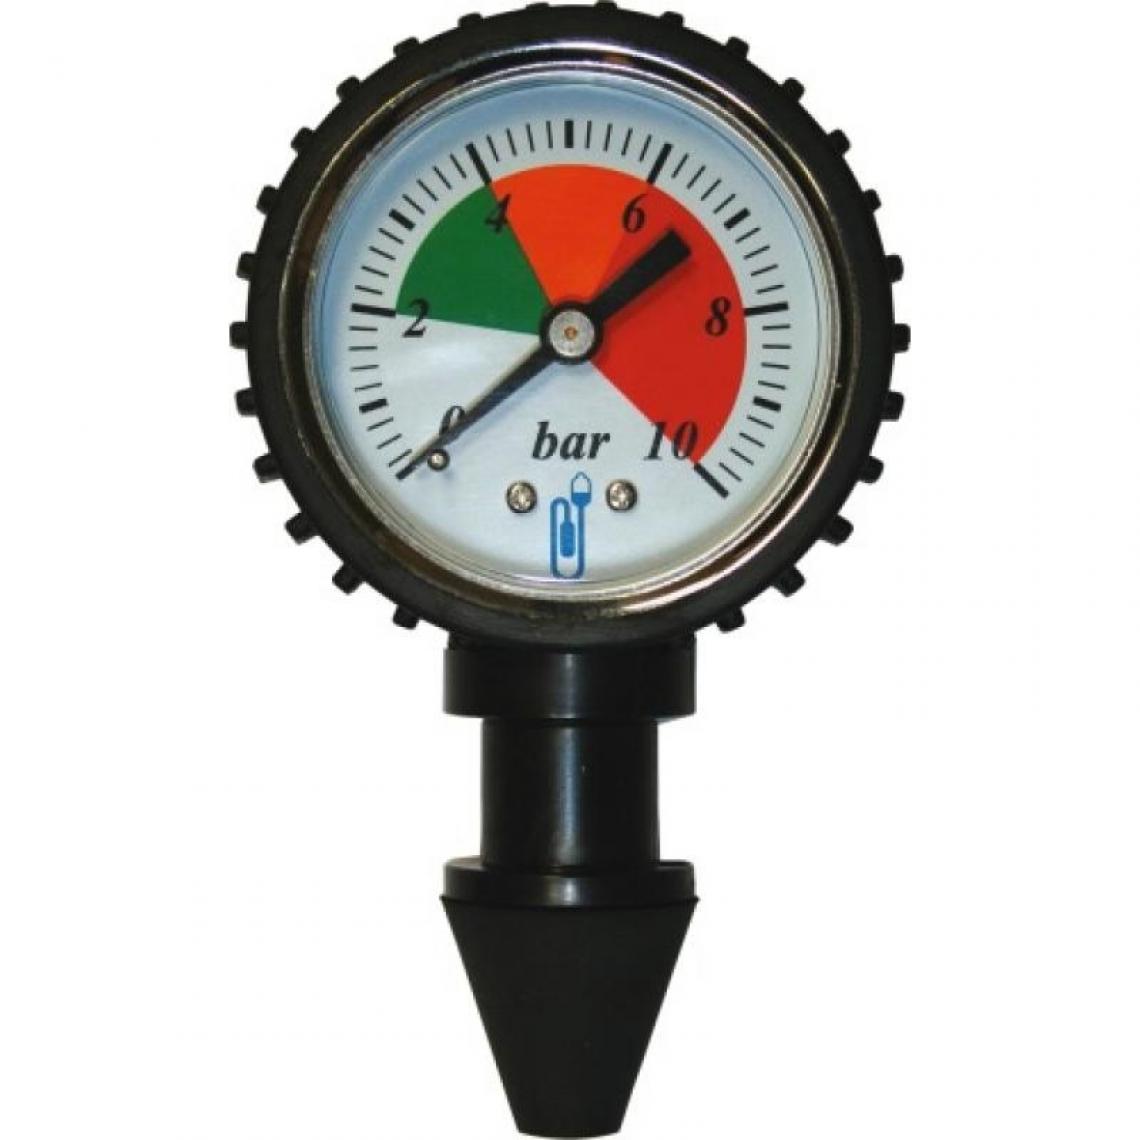 Distrilabo - Manomètre de pression cadran de 0 à 10 bars - Tuyau de cuivre et raccords